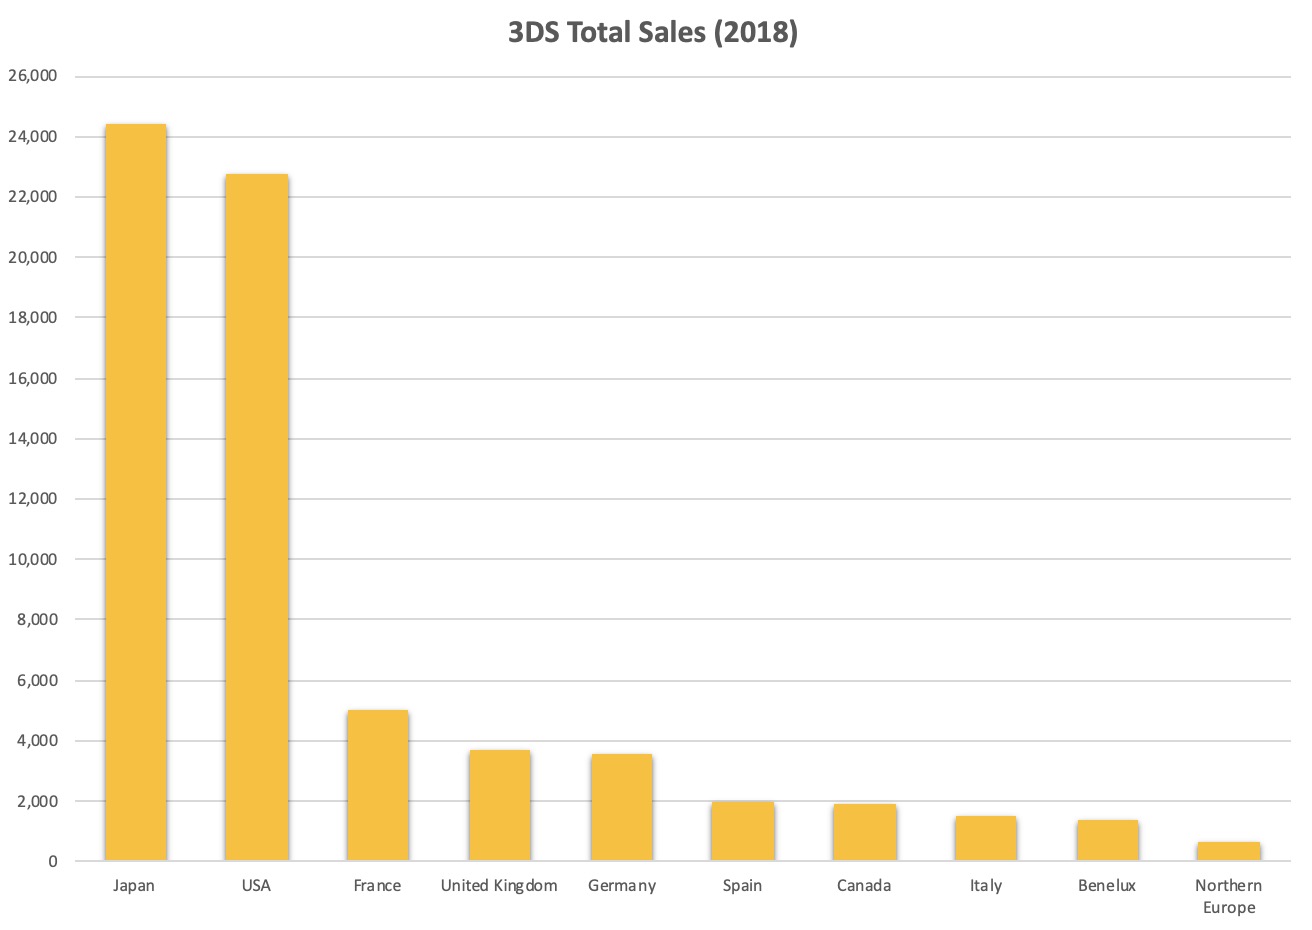 PS4/XB1/NS去年大部分国家销量：美国都是第一